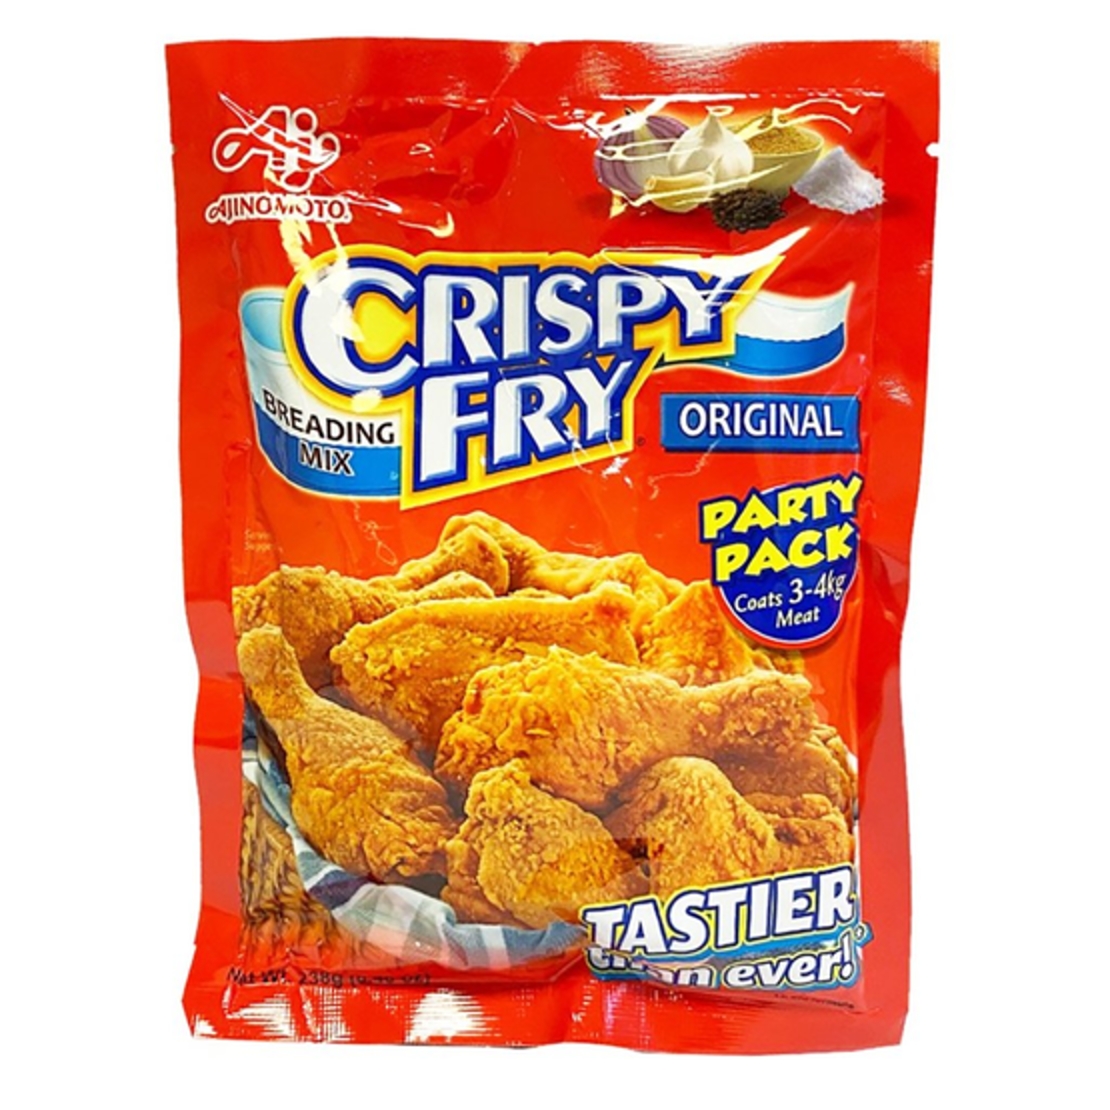 Crispy Fry Breading Mix Party Pack  - Original 